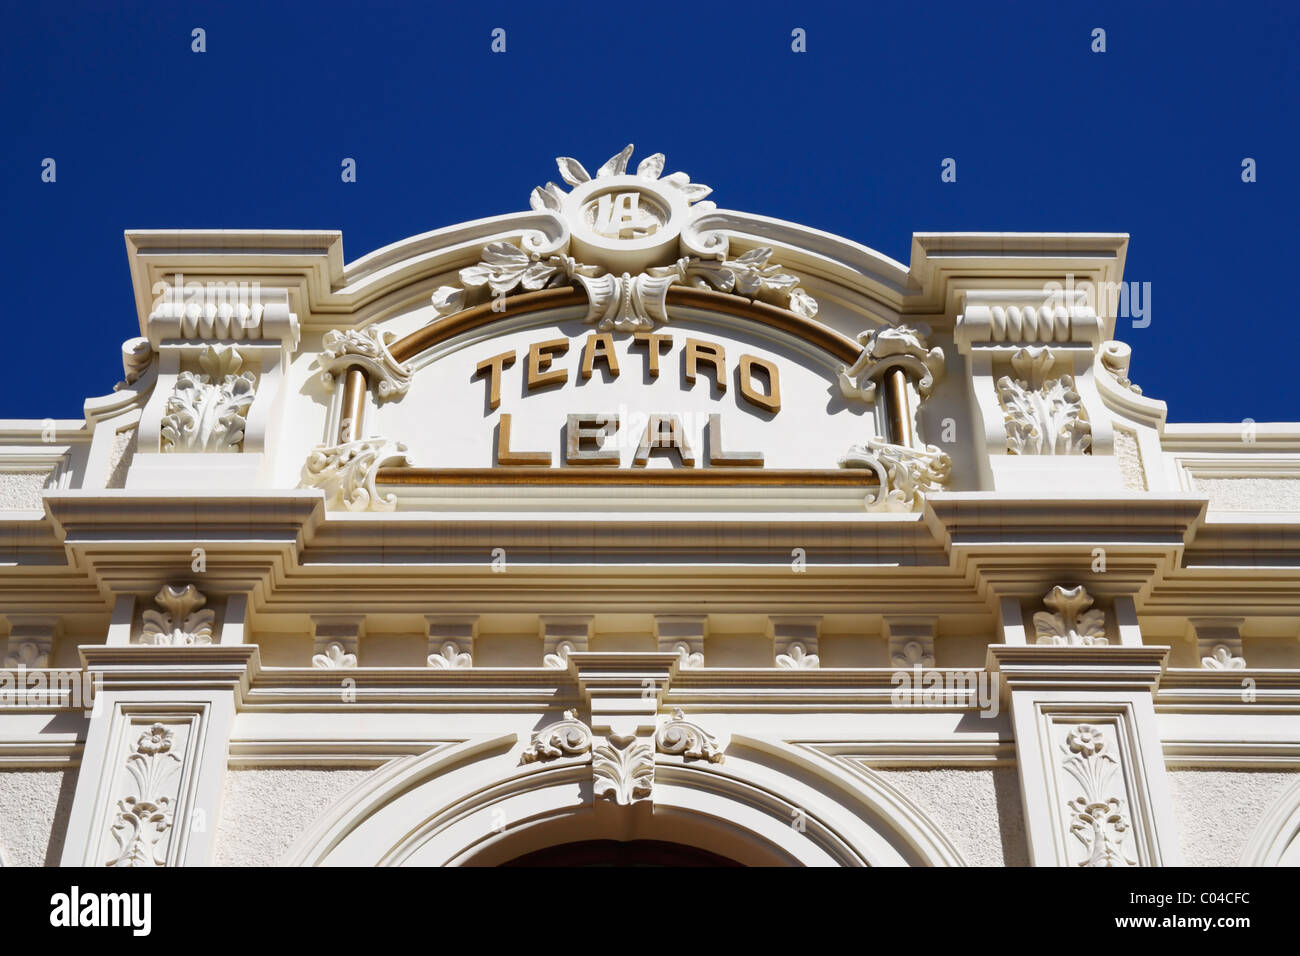 Teatro (theatre) Leal in San Cristobal de La Laguna on Tenerife, Canary Islands, Spain Stock Photo